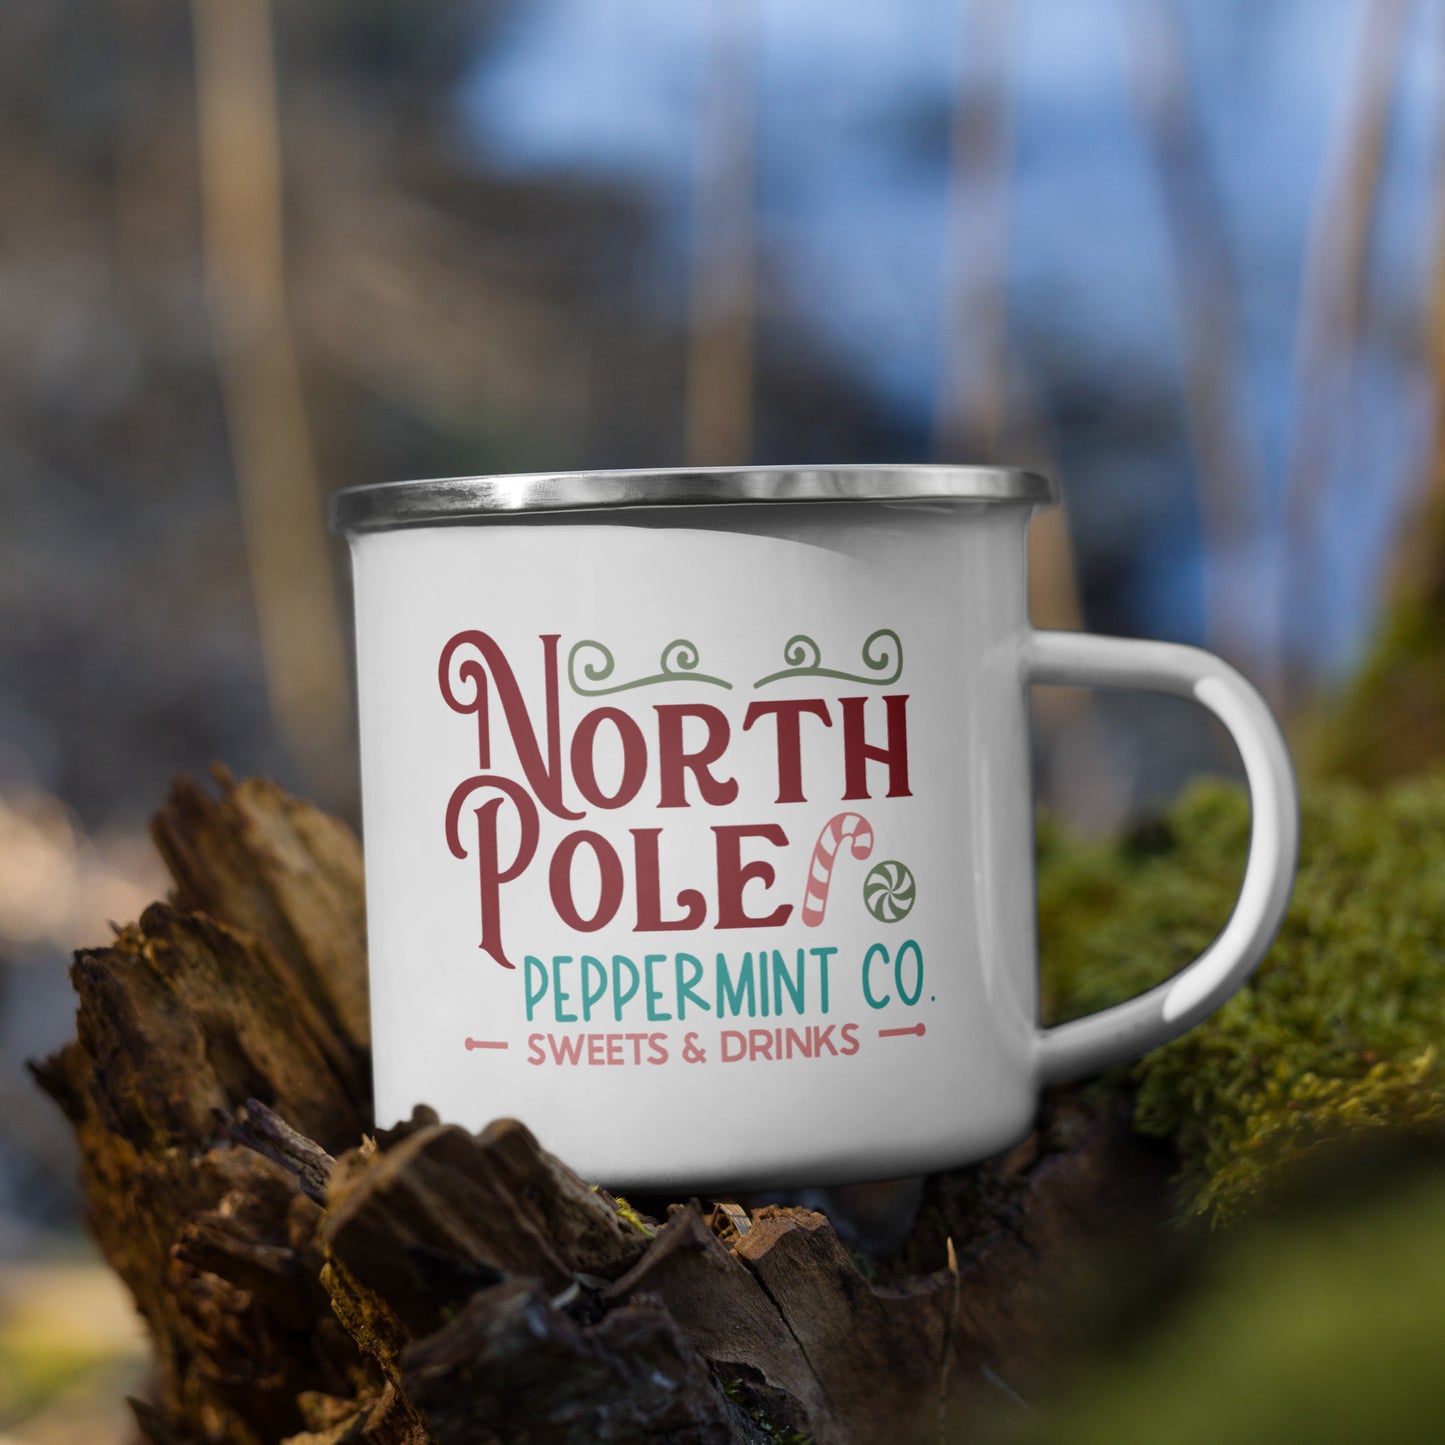 North Pole Peppermint Co. Enamel Mug